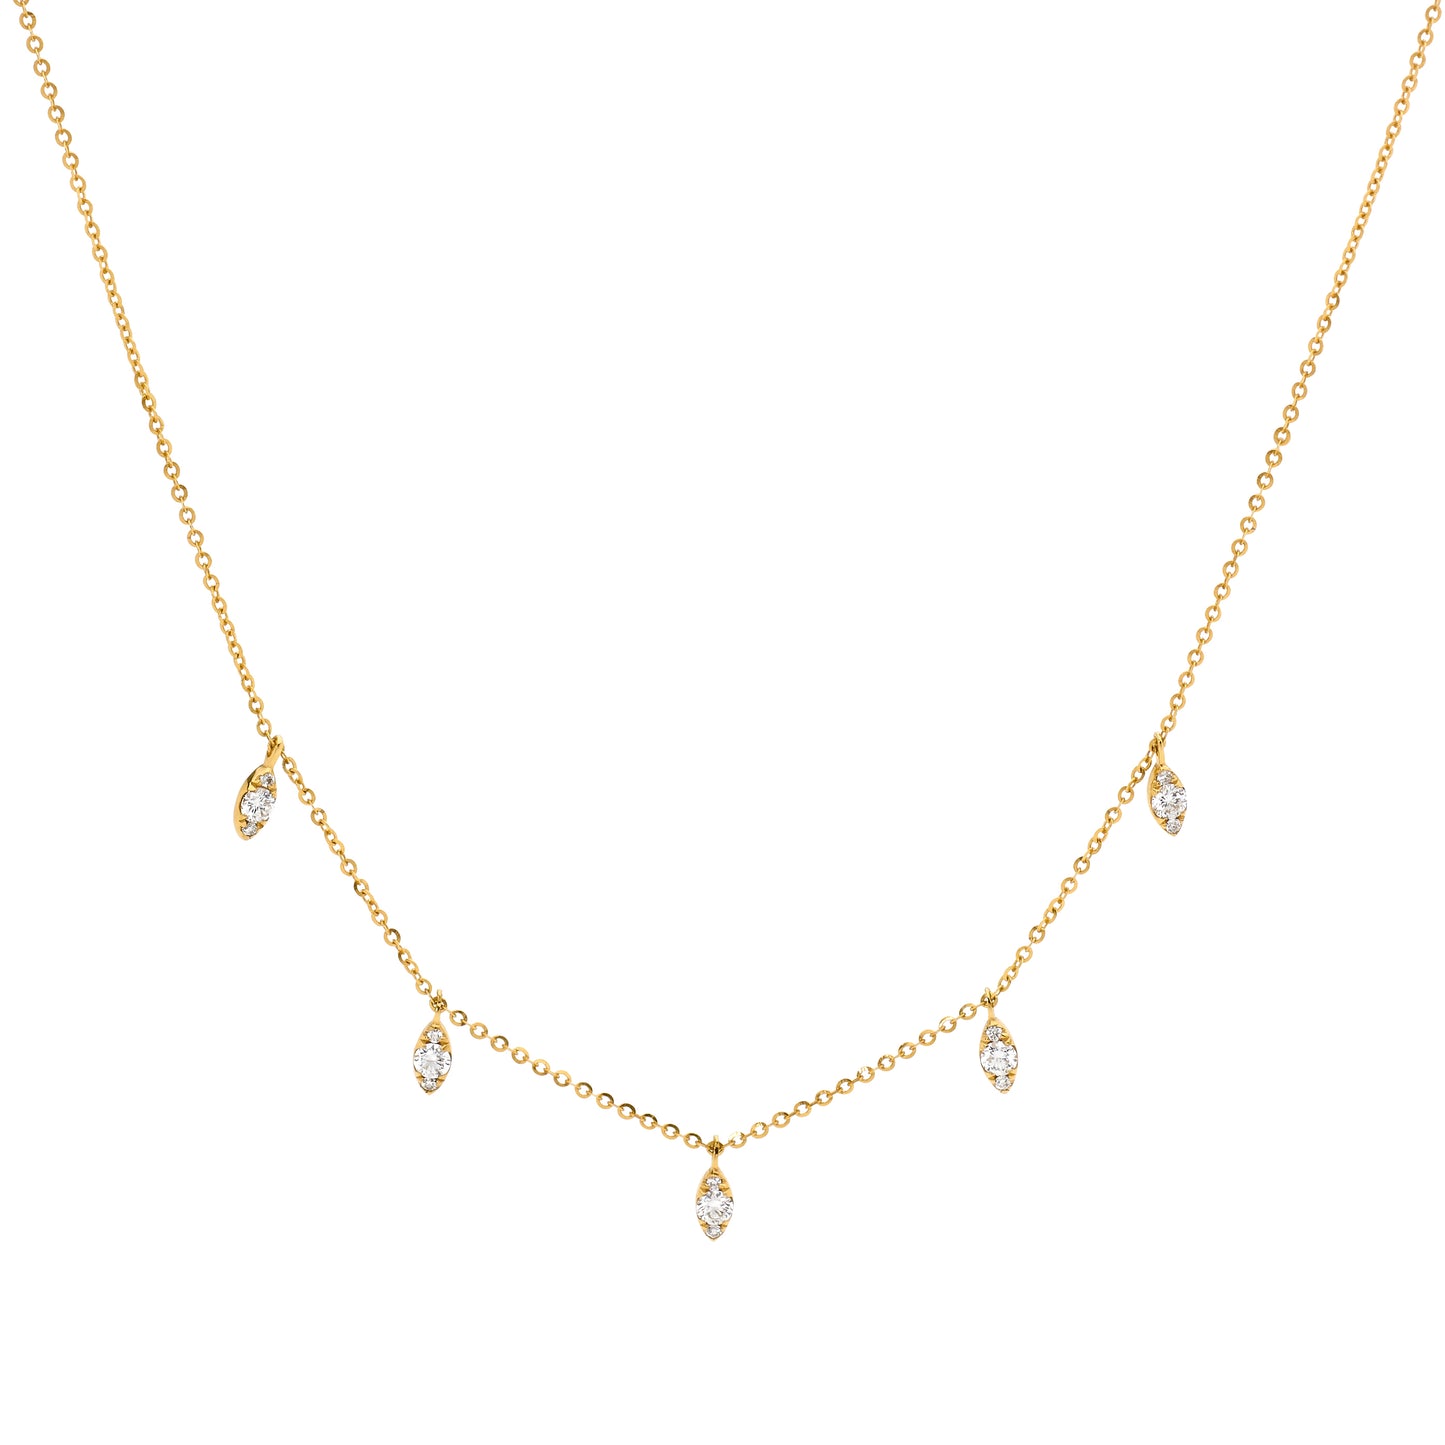 Marquise Diamond Charm Necklace